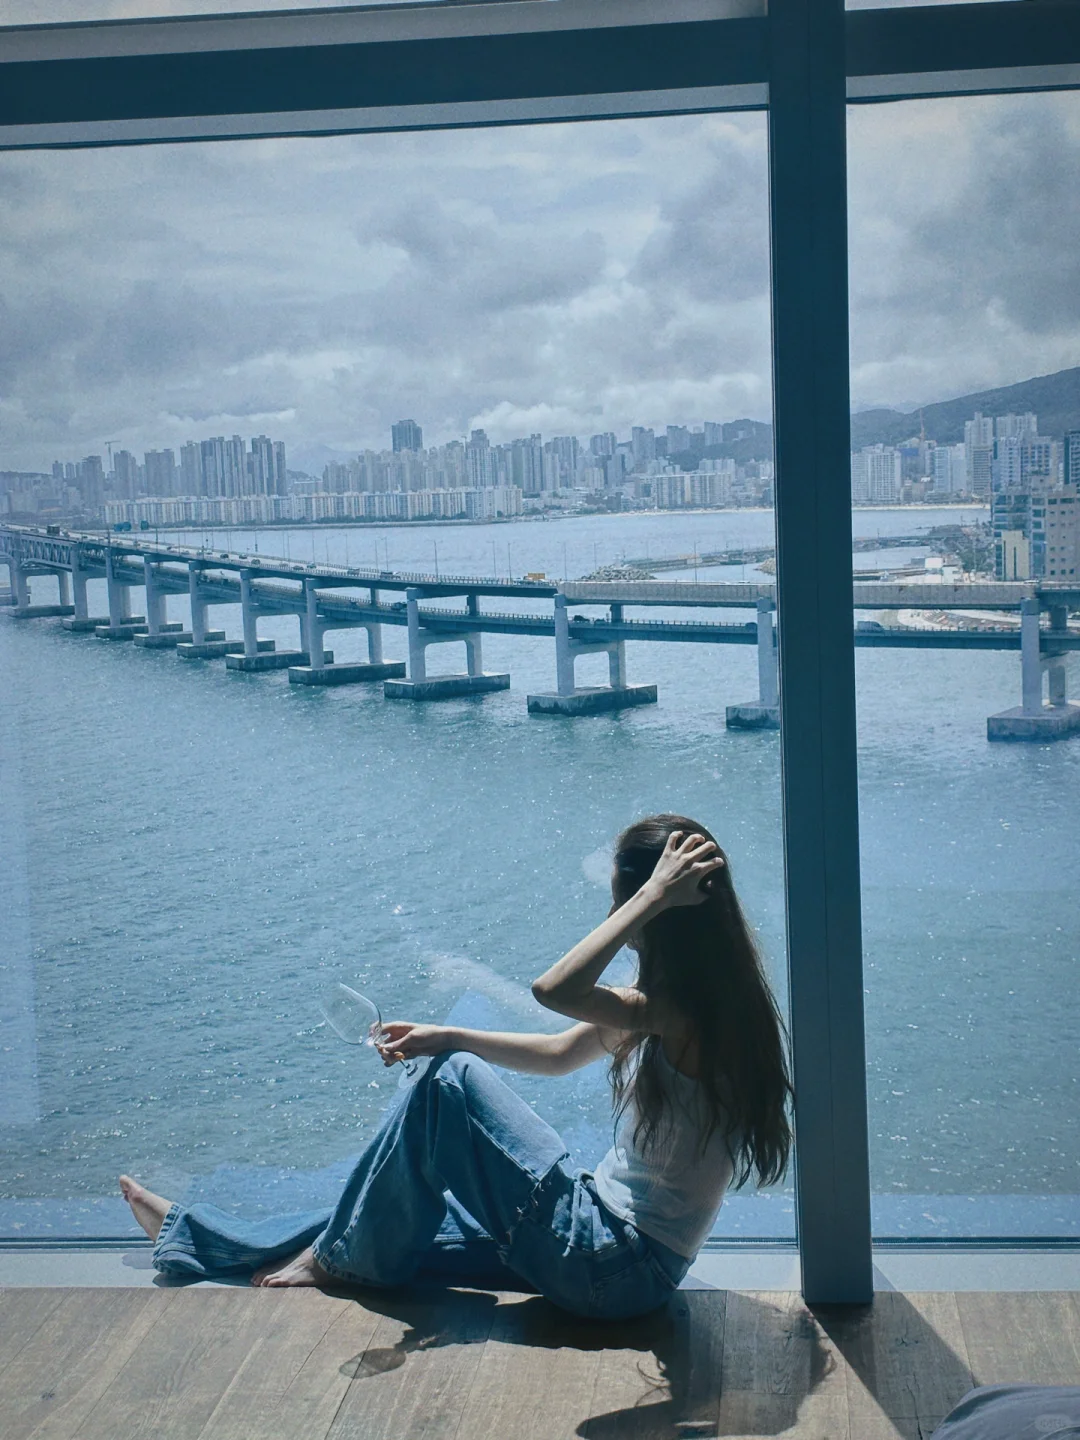 Busan/Jeju-Park Hyatt Hotel in Busan💙, South Korea, with a view of the Gwangan Bridge